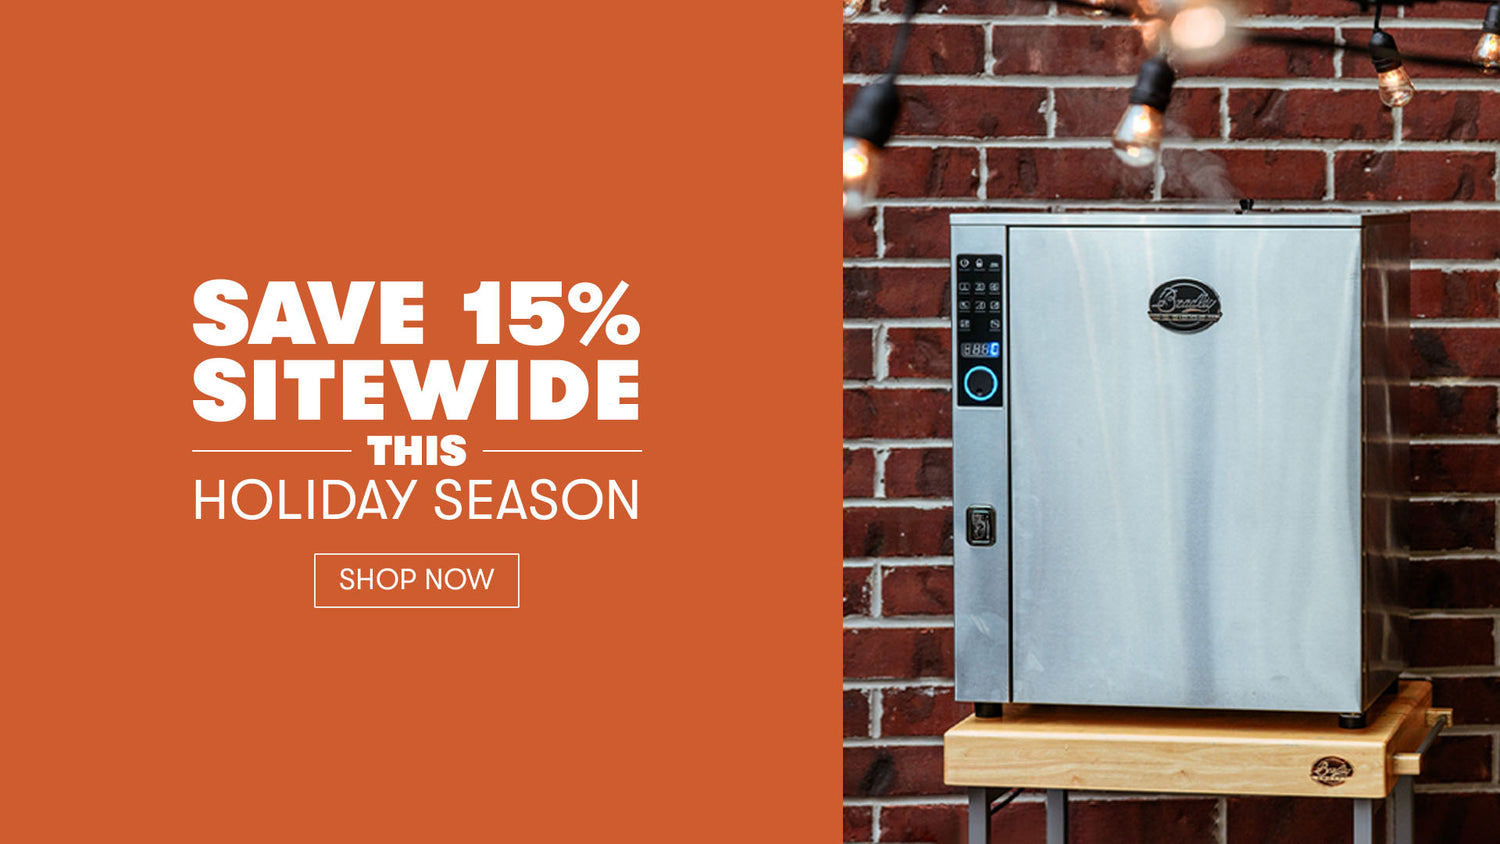 Thanksgiving Sale! 
15% off Sitewide November 16 - November 23
Shop Now
*Sale applies to orders on bradleysmoker.com